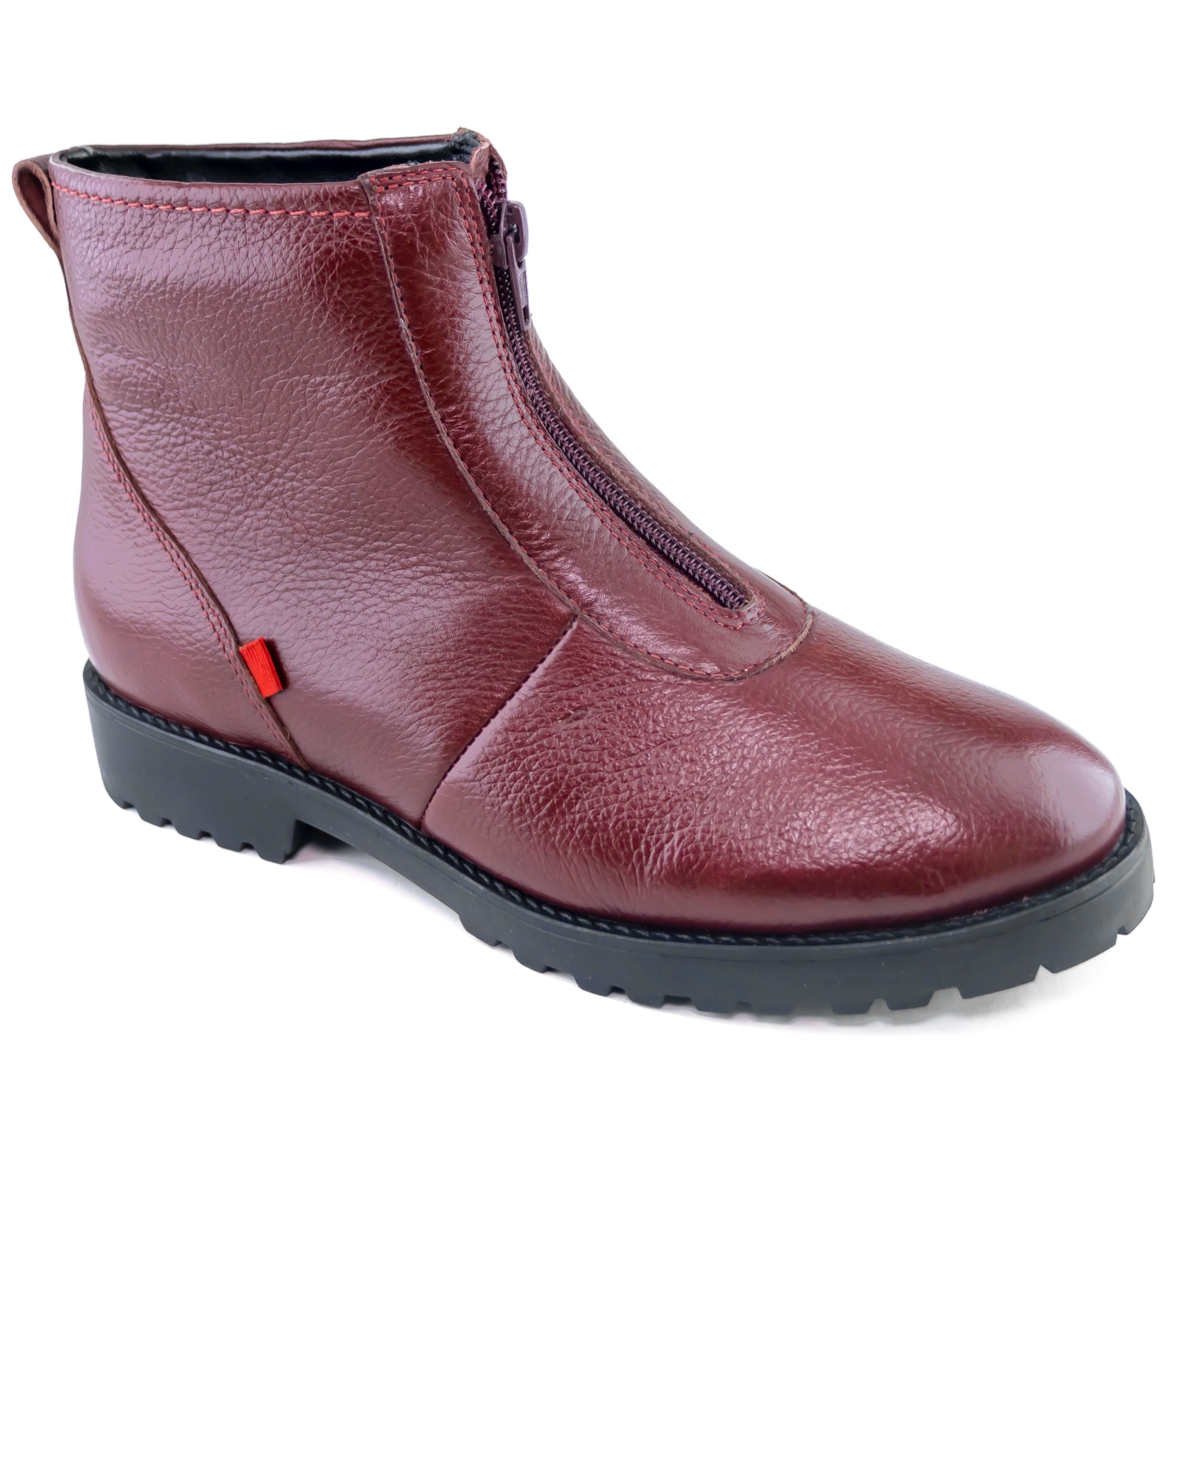 Women's Newbury Street Leather Boots - Mahogany Napa Soft